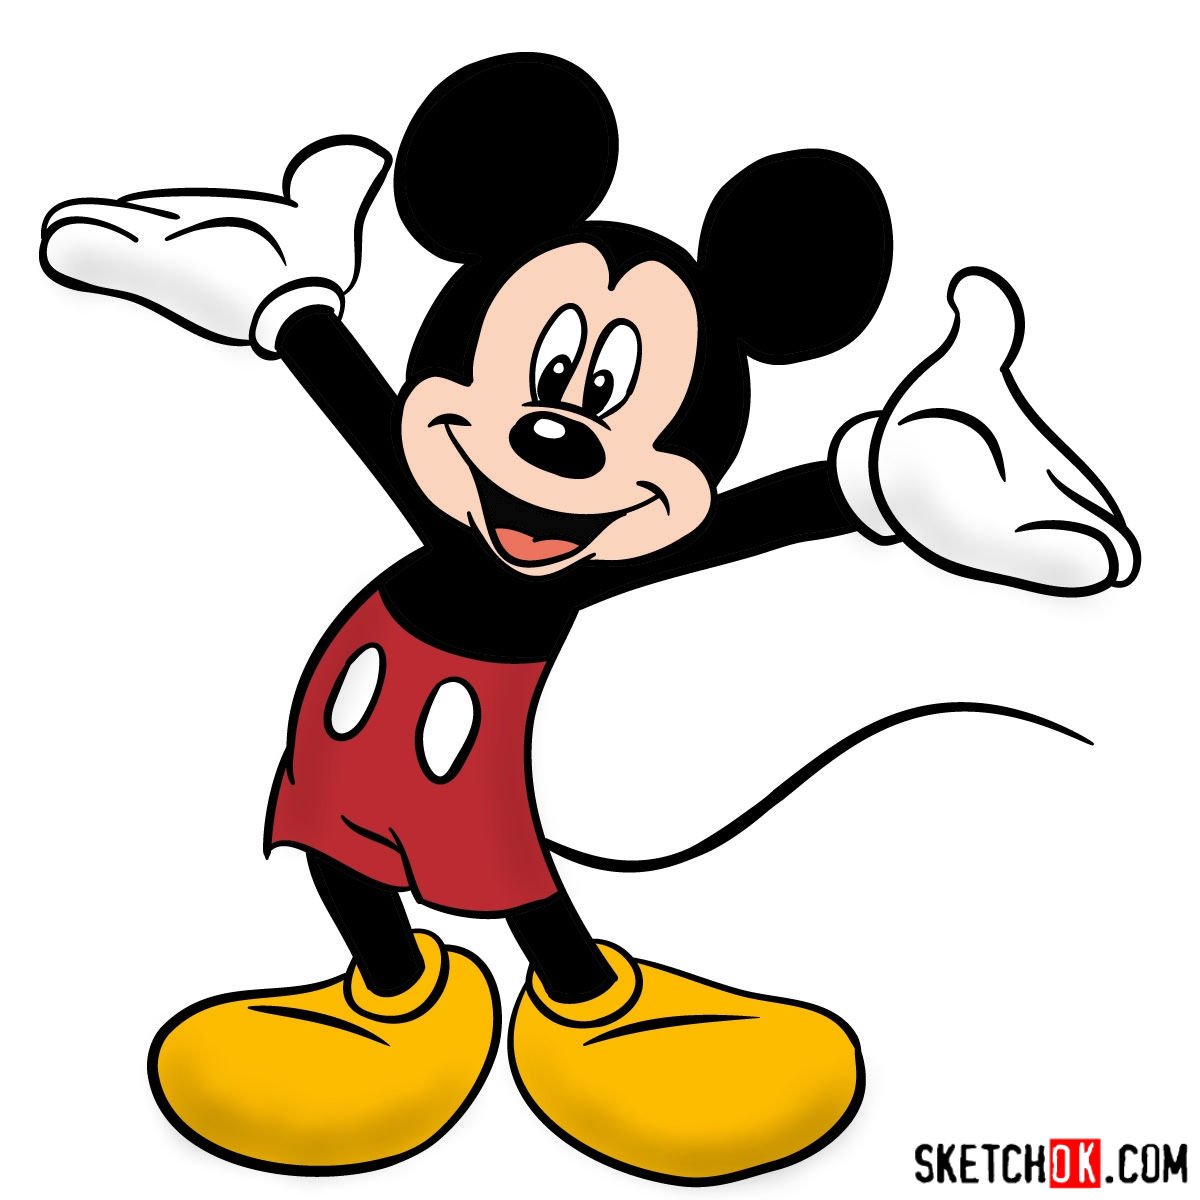 Mickey Mouse - How To Draw Made Easy-saigonsouth.com.vn